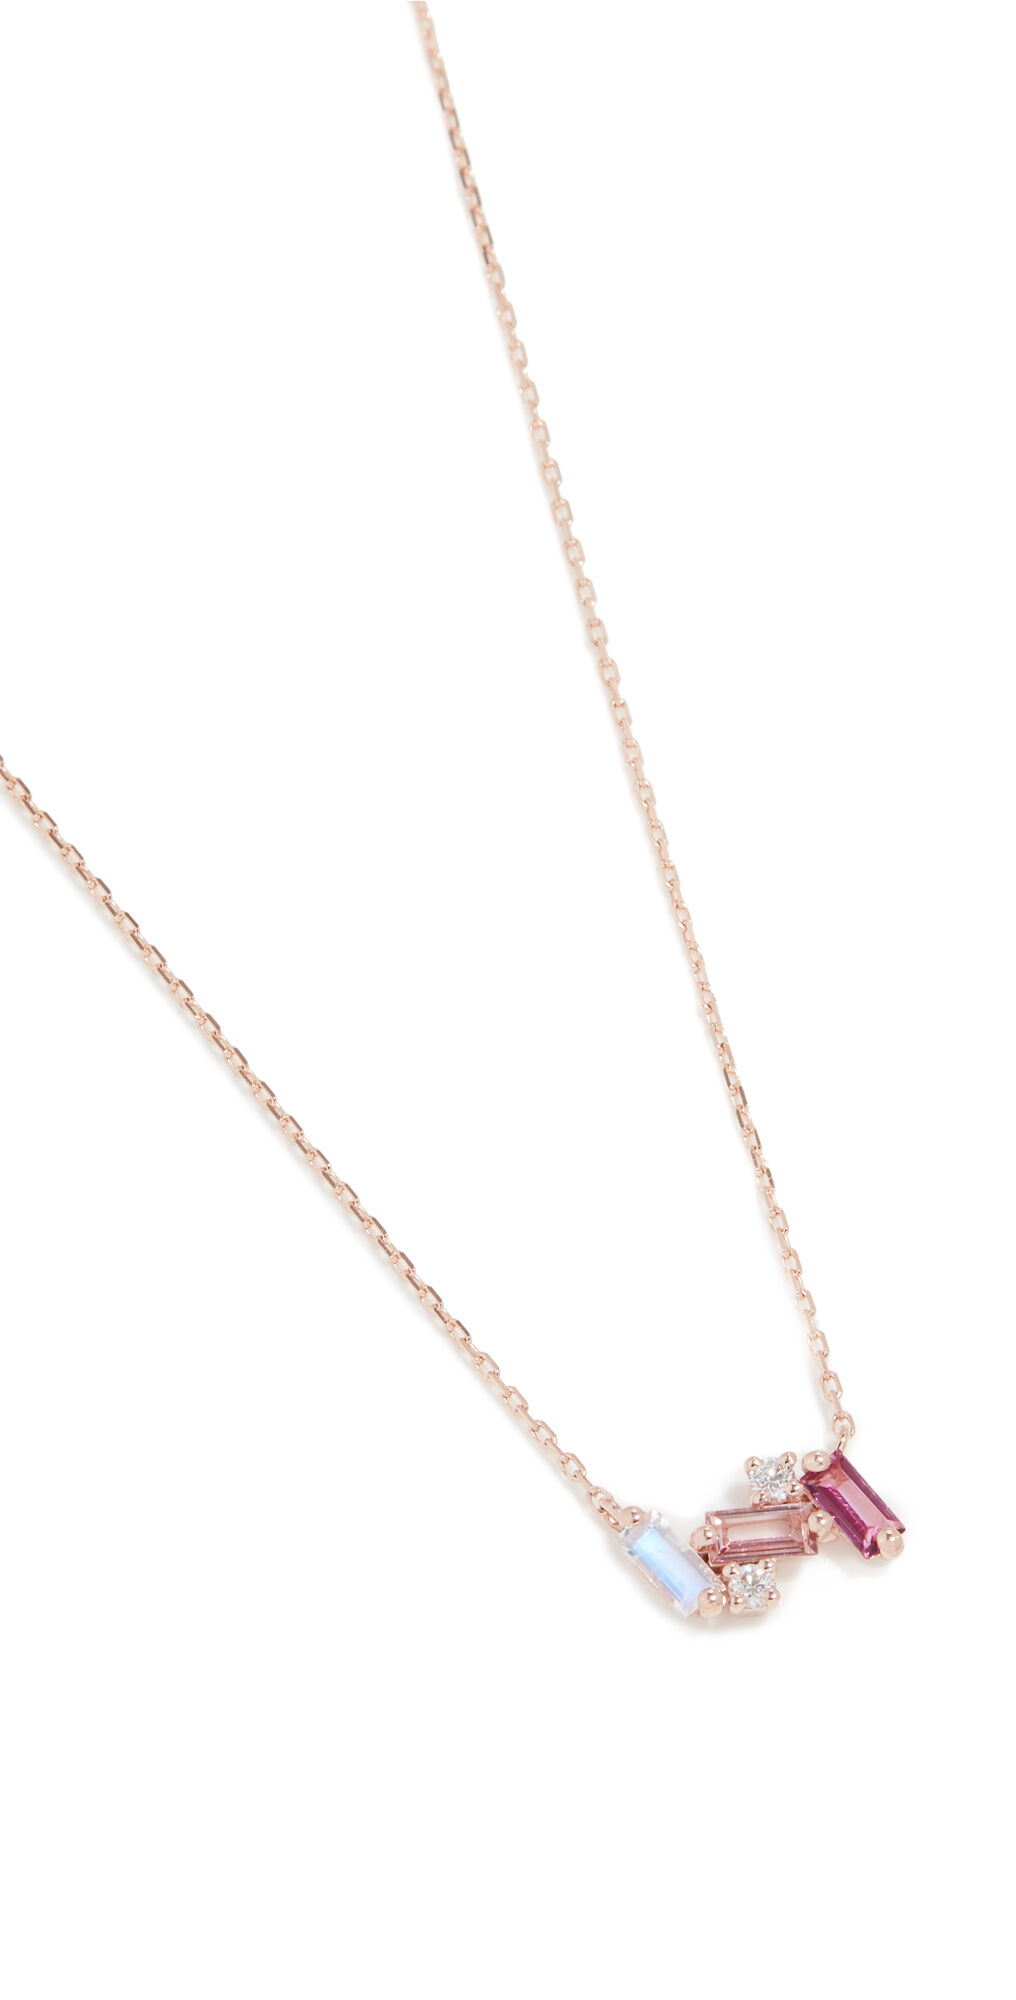 Kalan by Suzanne Kalan Baguette Necklace Rose Gold/Pink Topaz One Size  Rose Gold/Pink Topaz  size:One Size